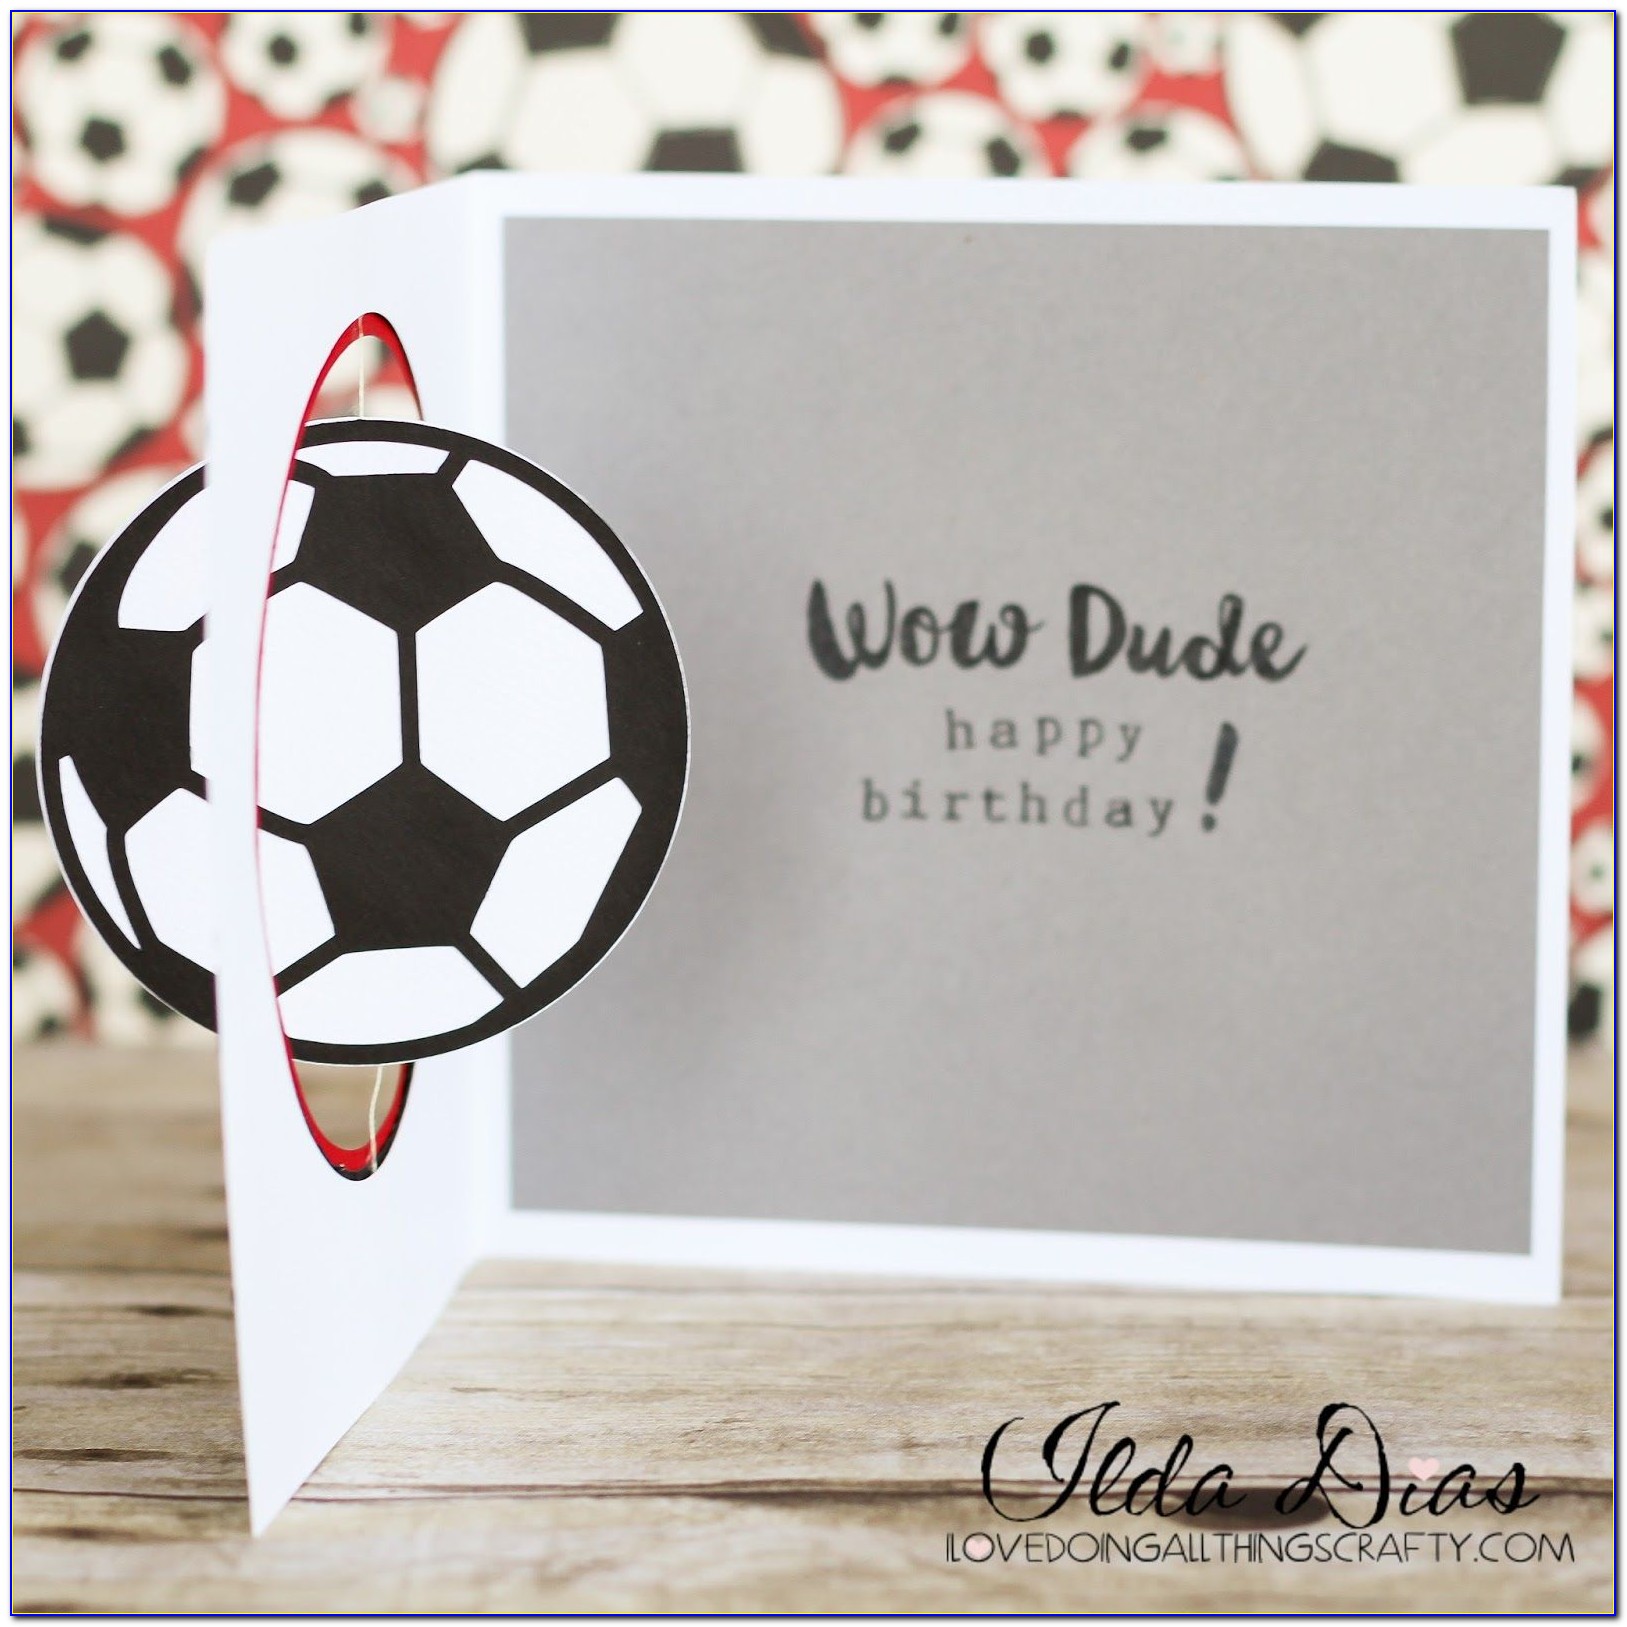 jersey-birthday-ideas-20-birthday-card-ideas-for-friend-boyfriend-creative-handmade-dad